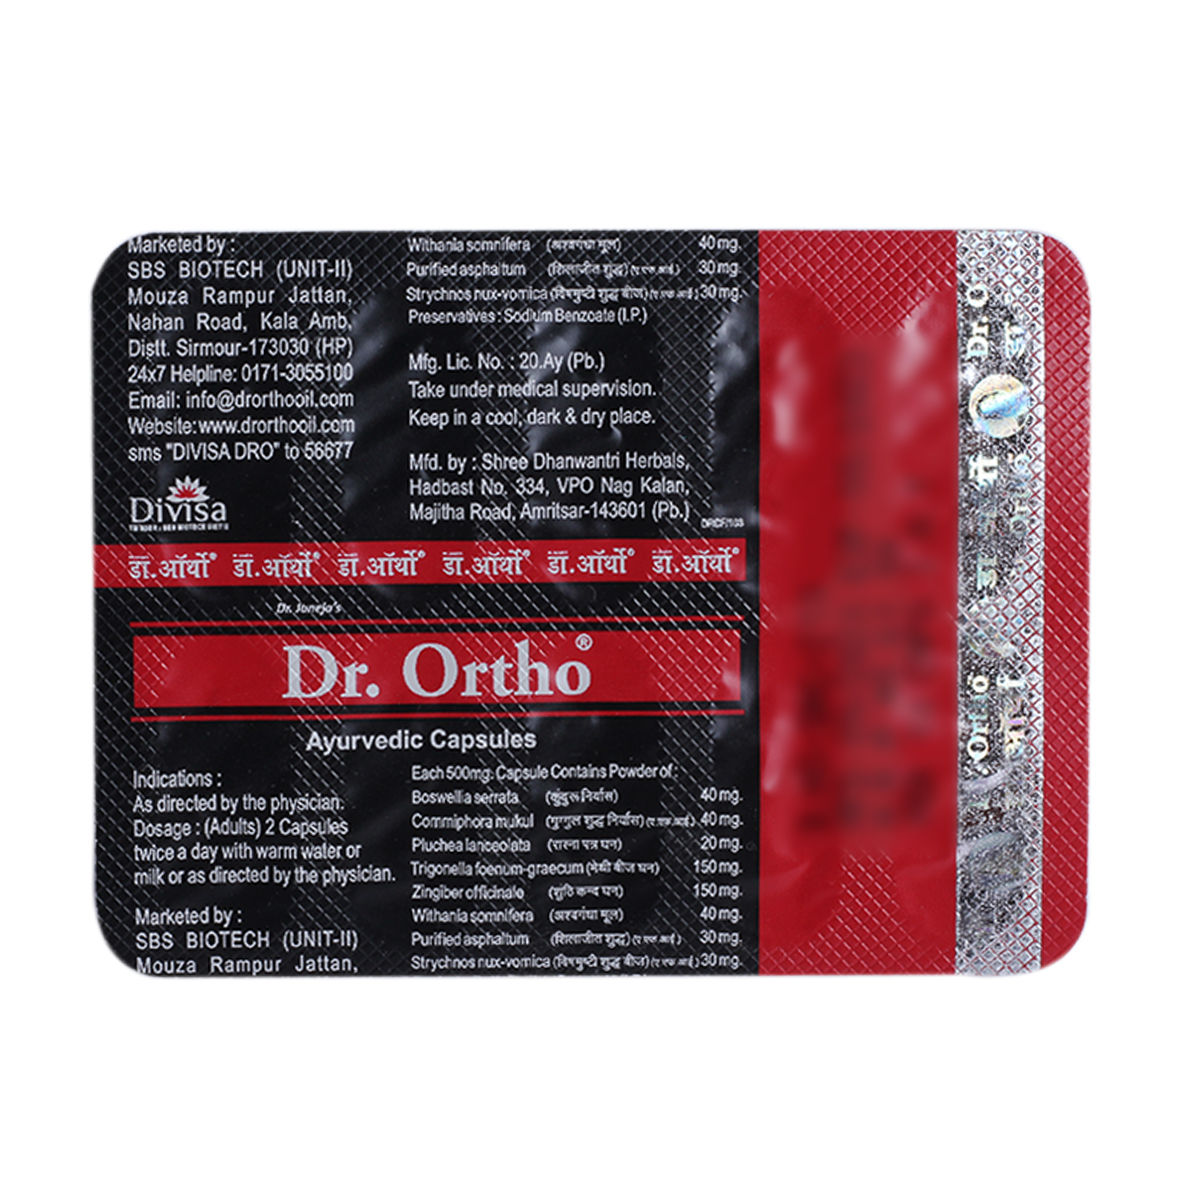 Buy Dr. Ortho, 10 Capsules Online